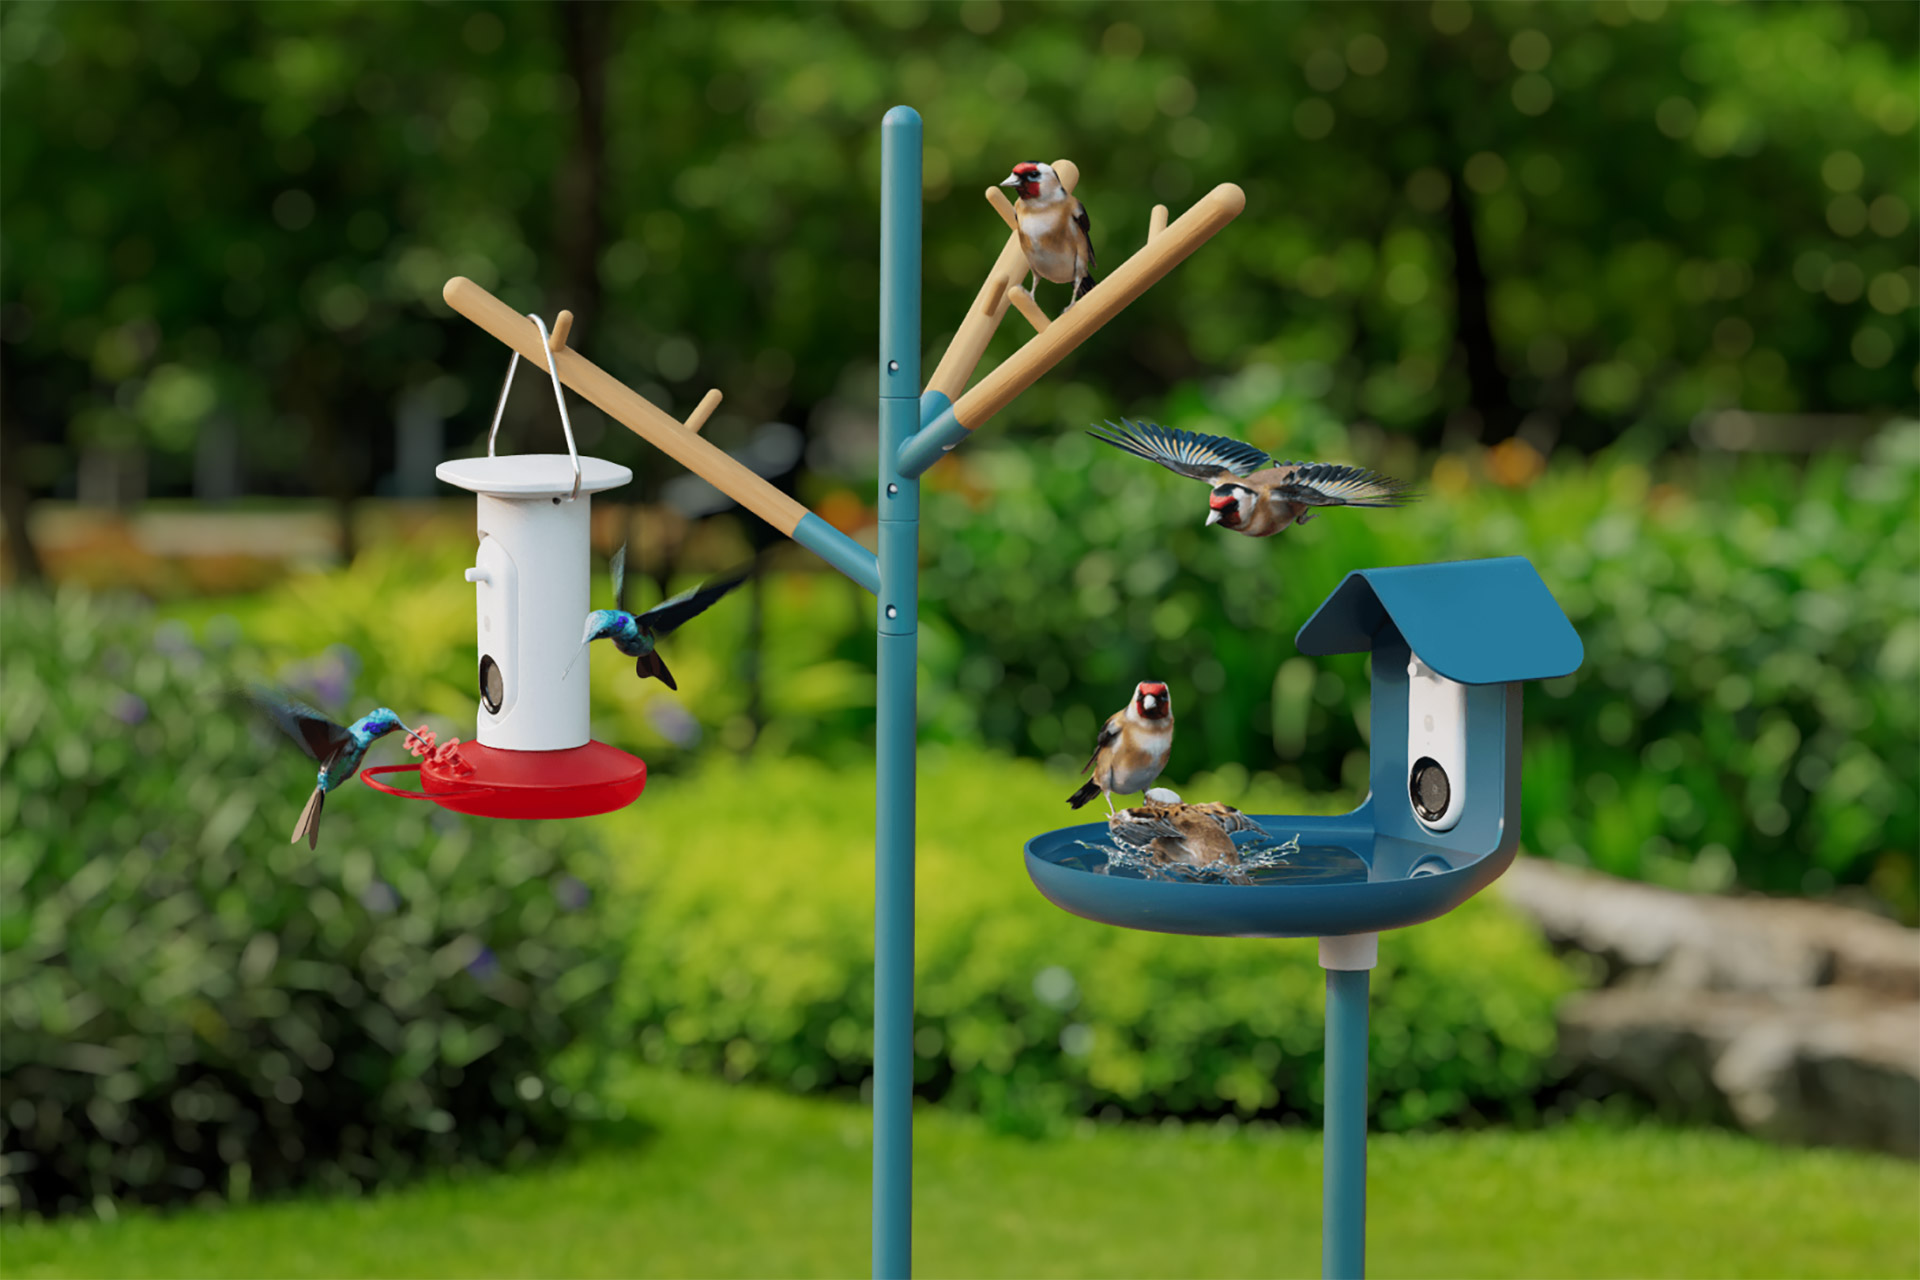 Bird Buddy Accessories - Perches, Bird Bath, Humming bird Feeder holders  par BiggBadaBoom, Téléchargez gratuitement un modèle STL